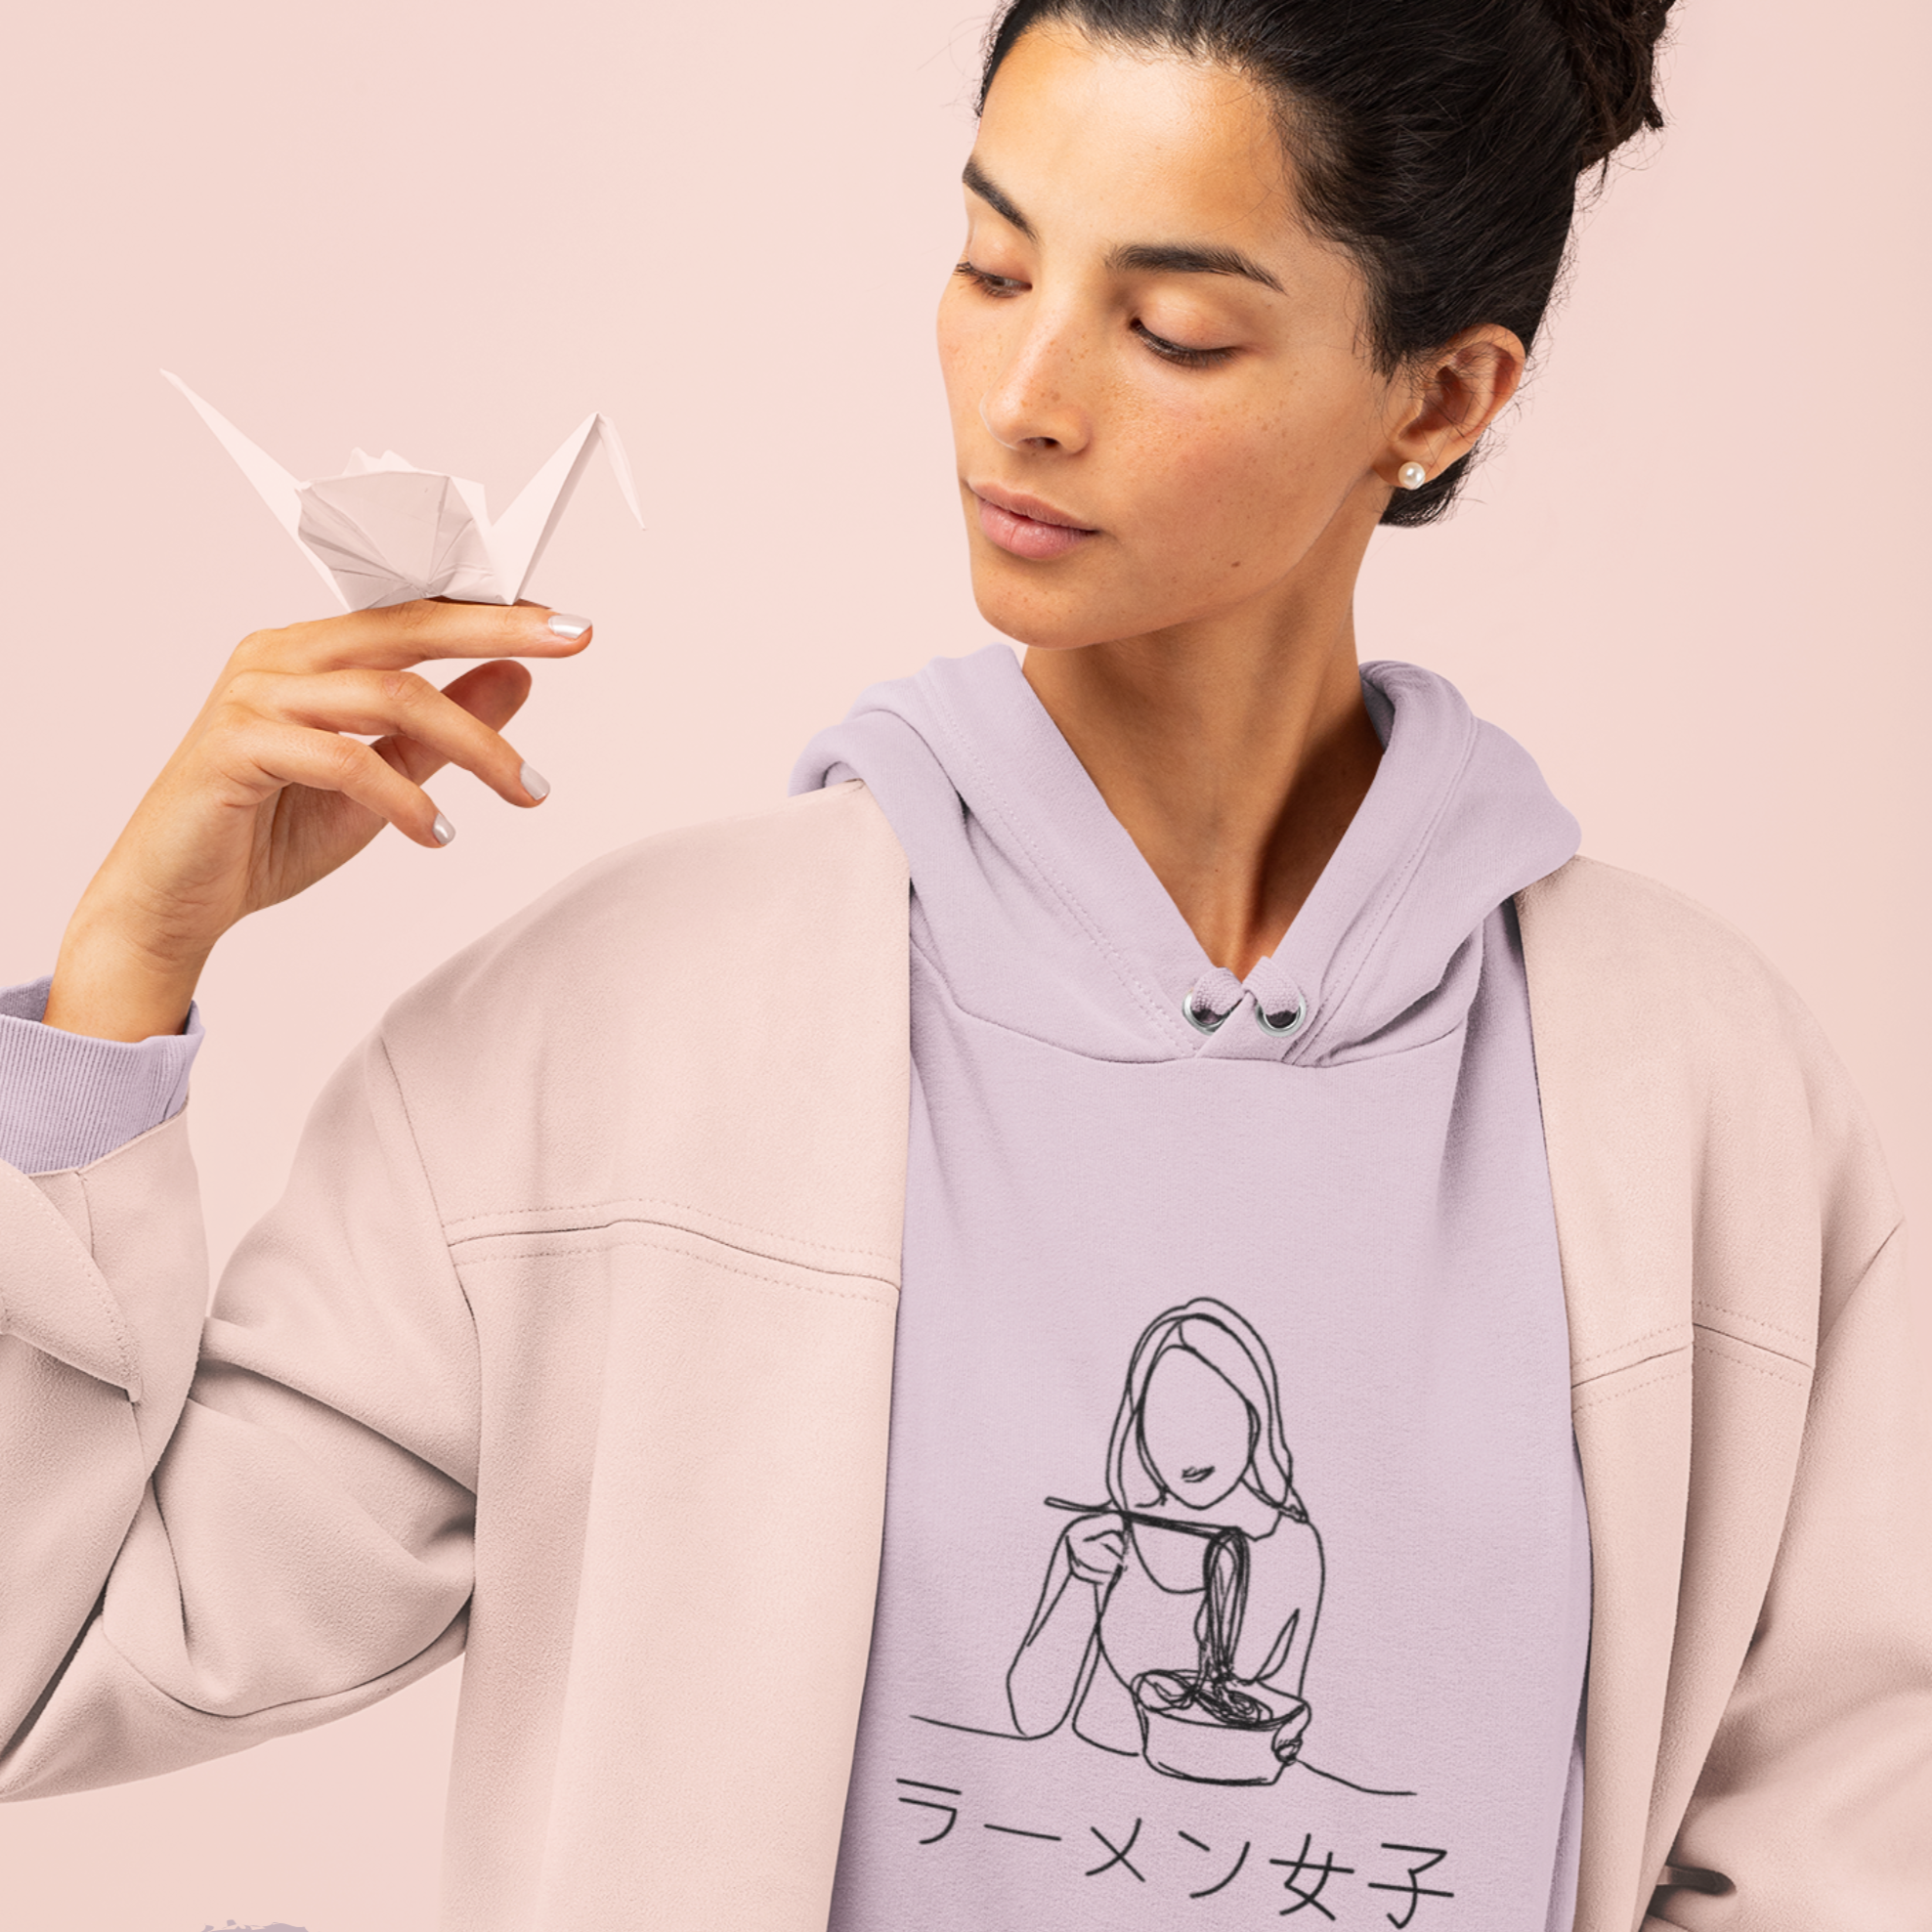 Ramen Hoodie: Japanese Foodie Shirt with Line Art of a Ramen-Eating Woman - Authentic Ramen Art Design